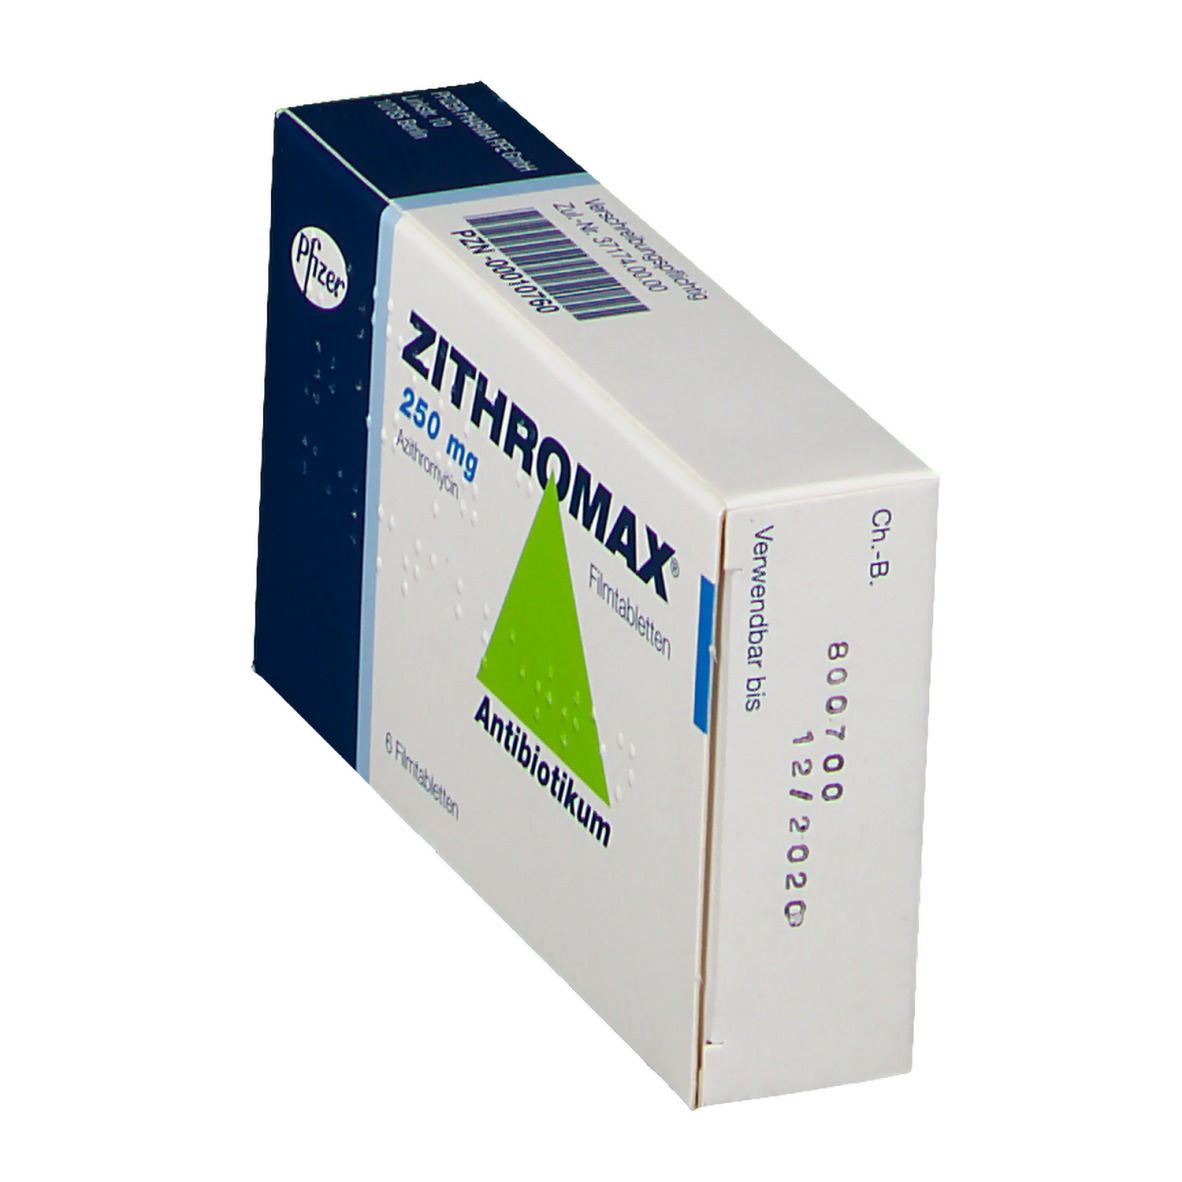 ZITHROMAX® 250 mg